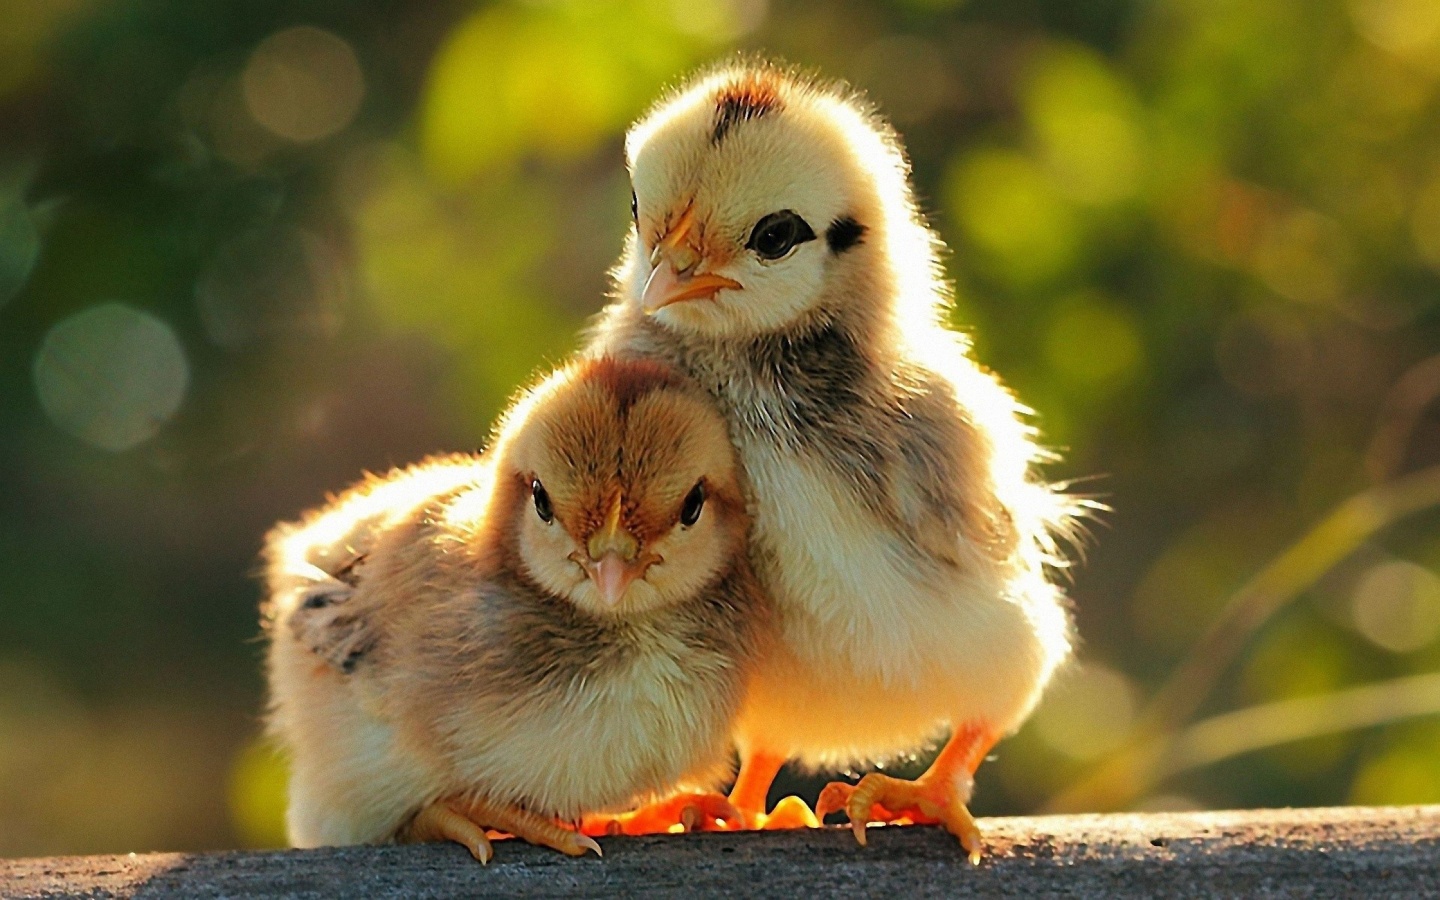 Two Lovely Chicken Sunshine Spring